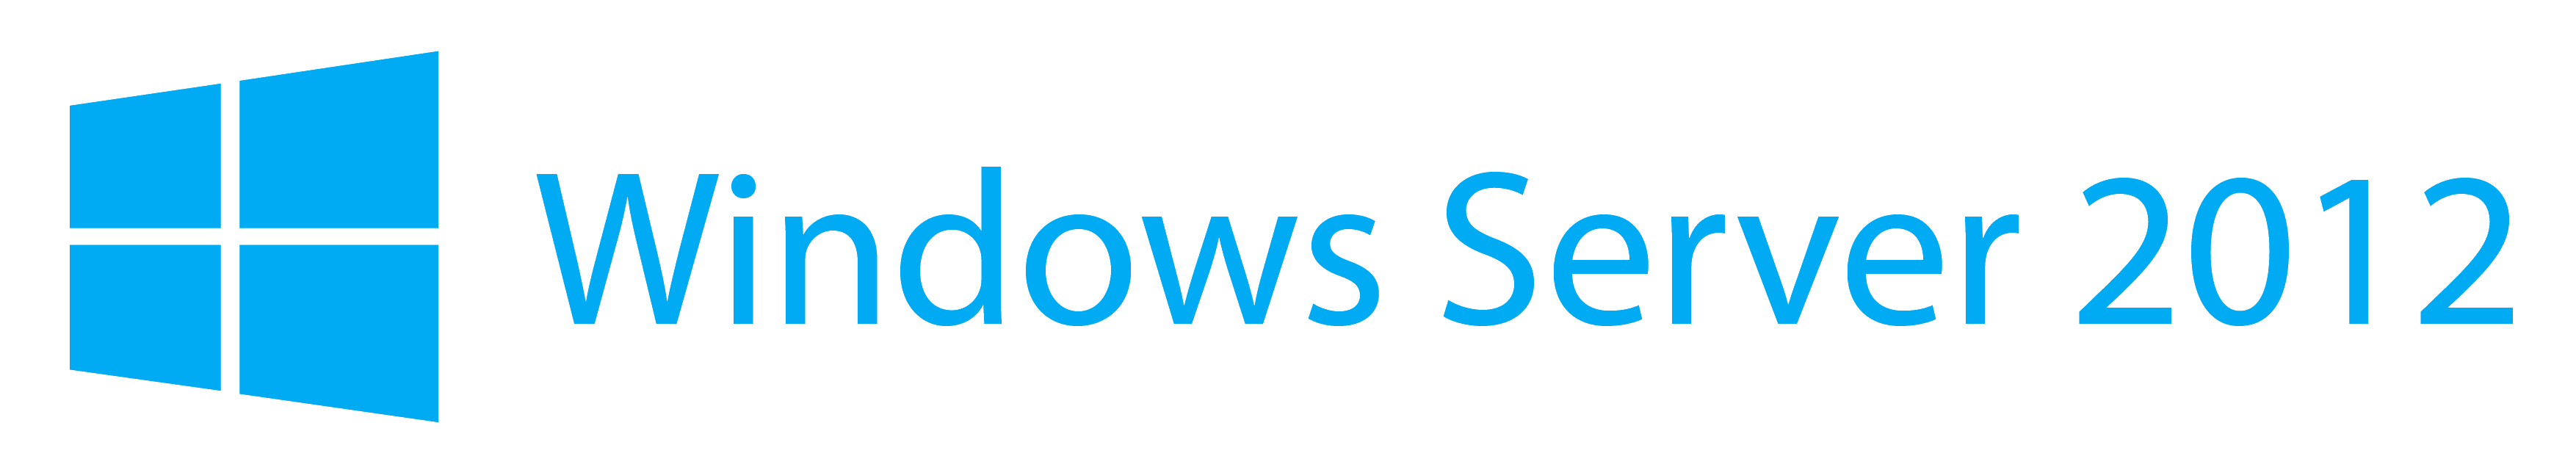 Windows Server 2016 Logo - File:Windows server 2012-logo.png - Wikimedia Commons